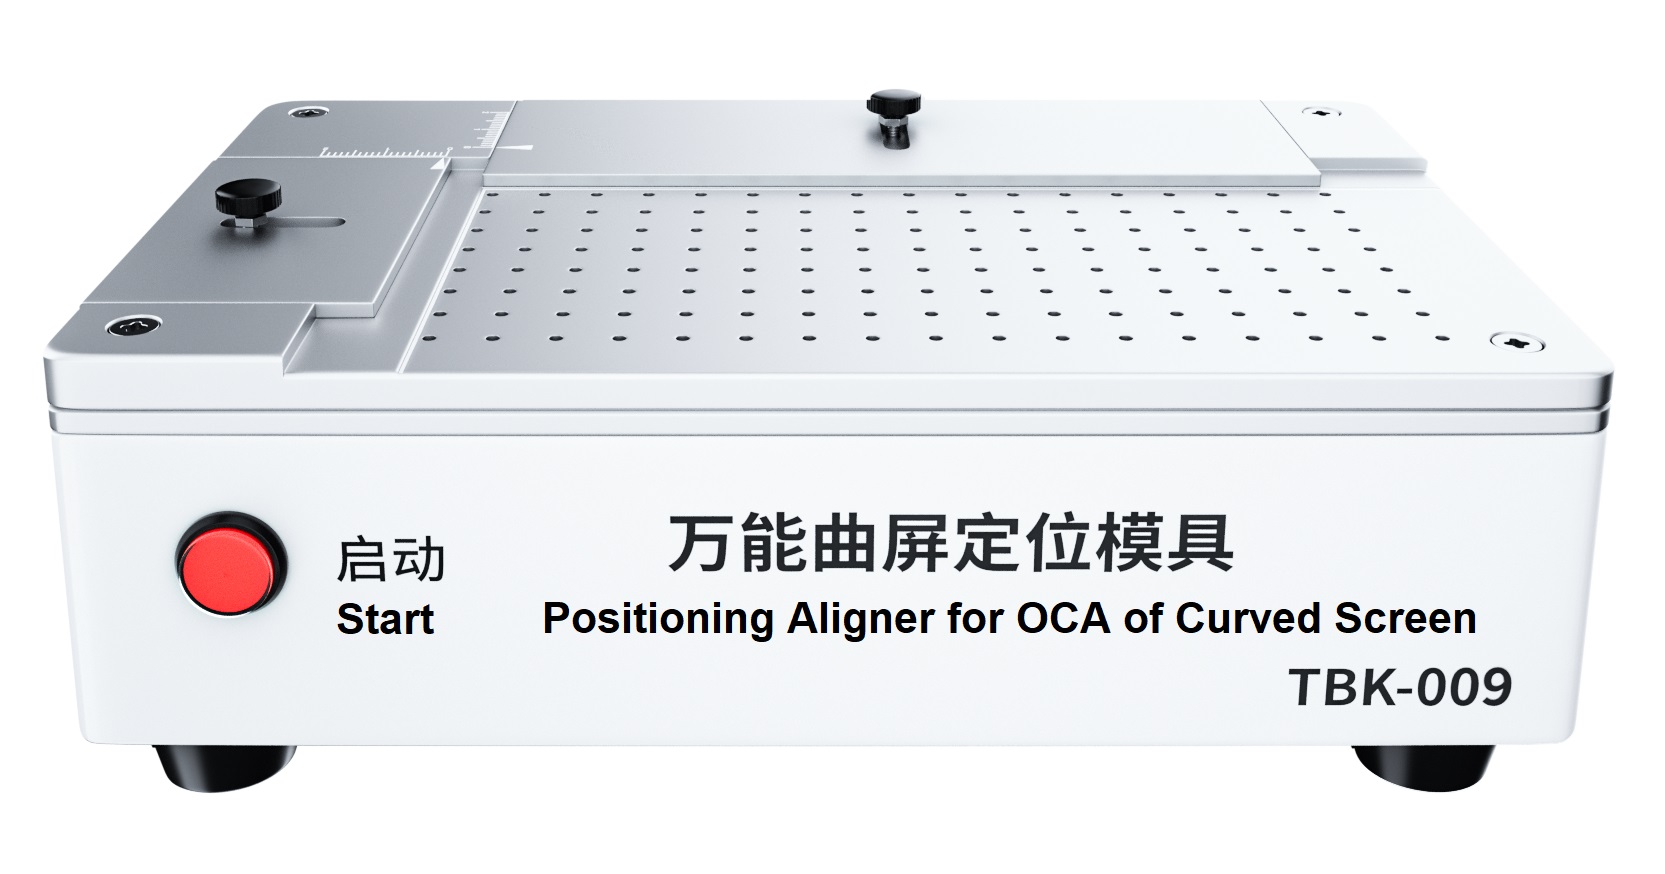 TBK-009 Positioning Aligner for OCA of Curved Screen